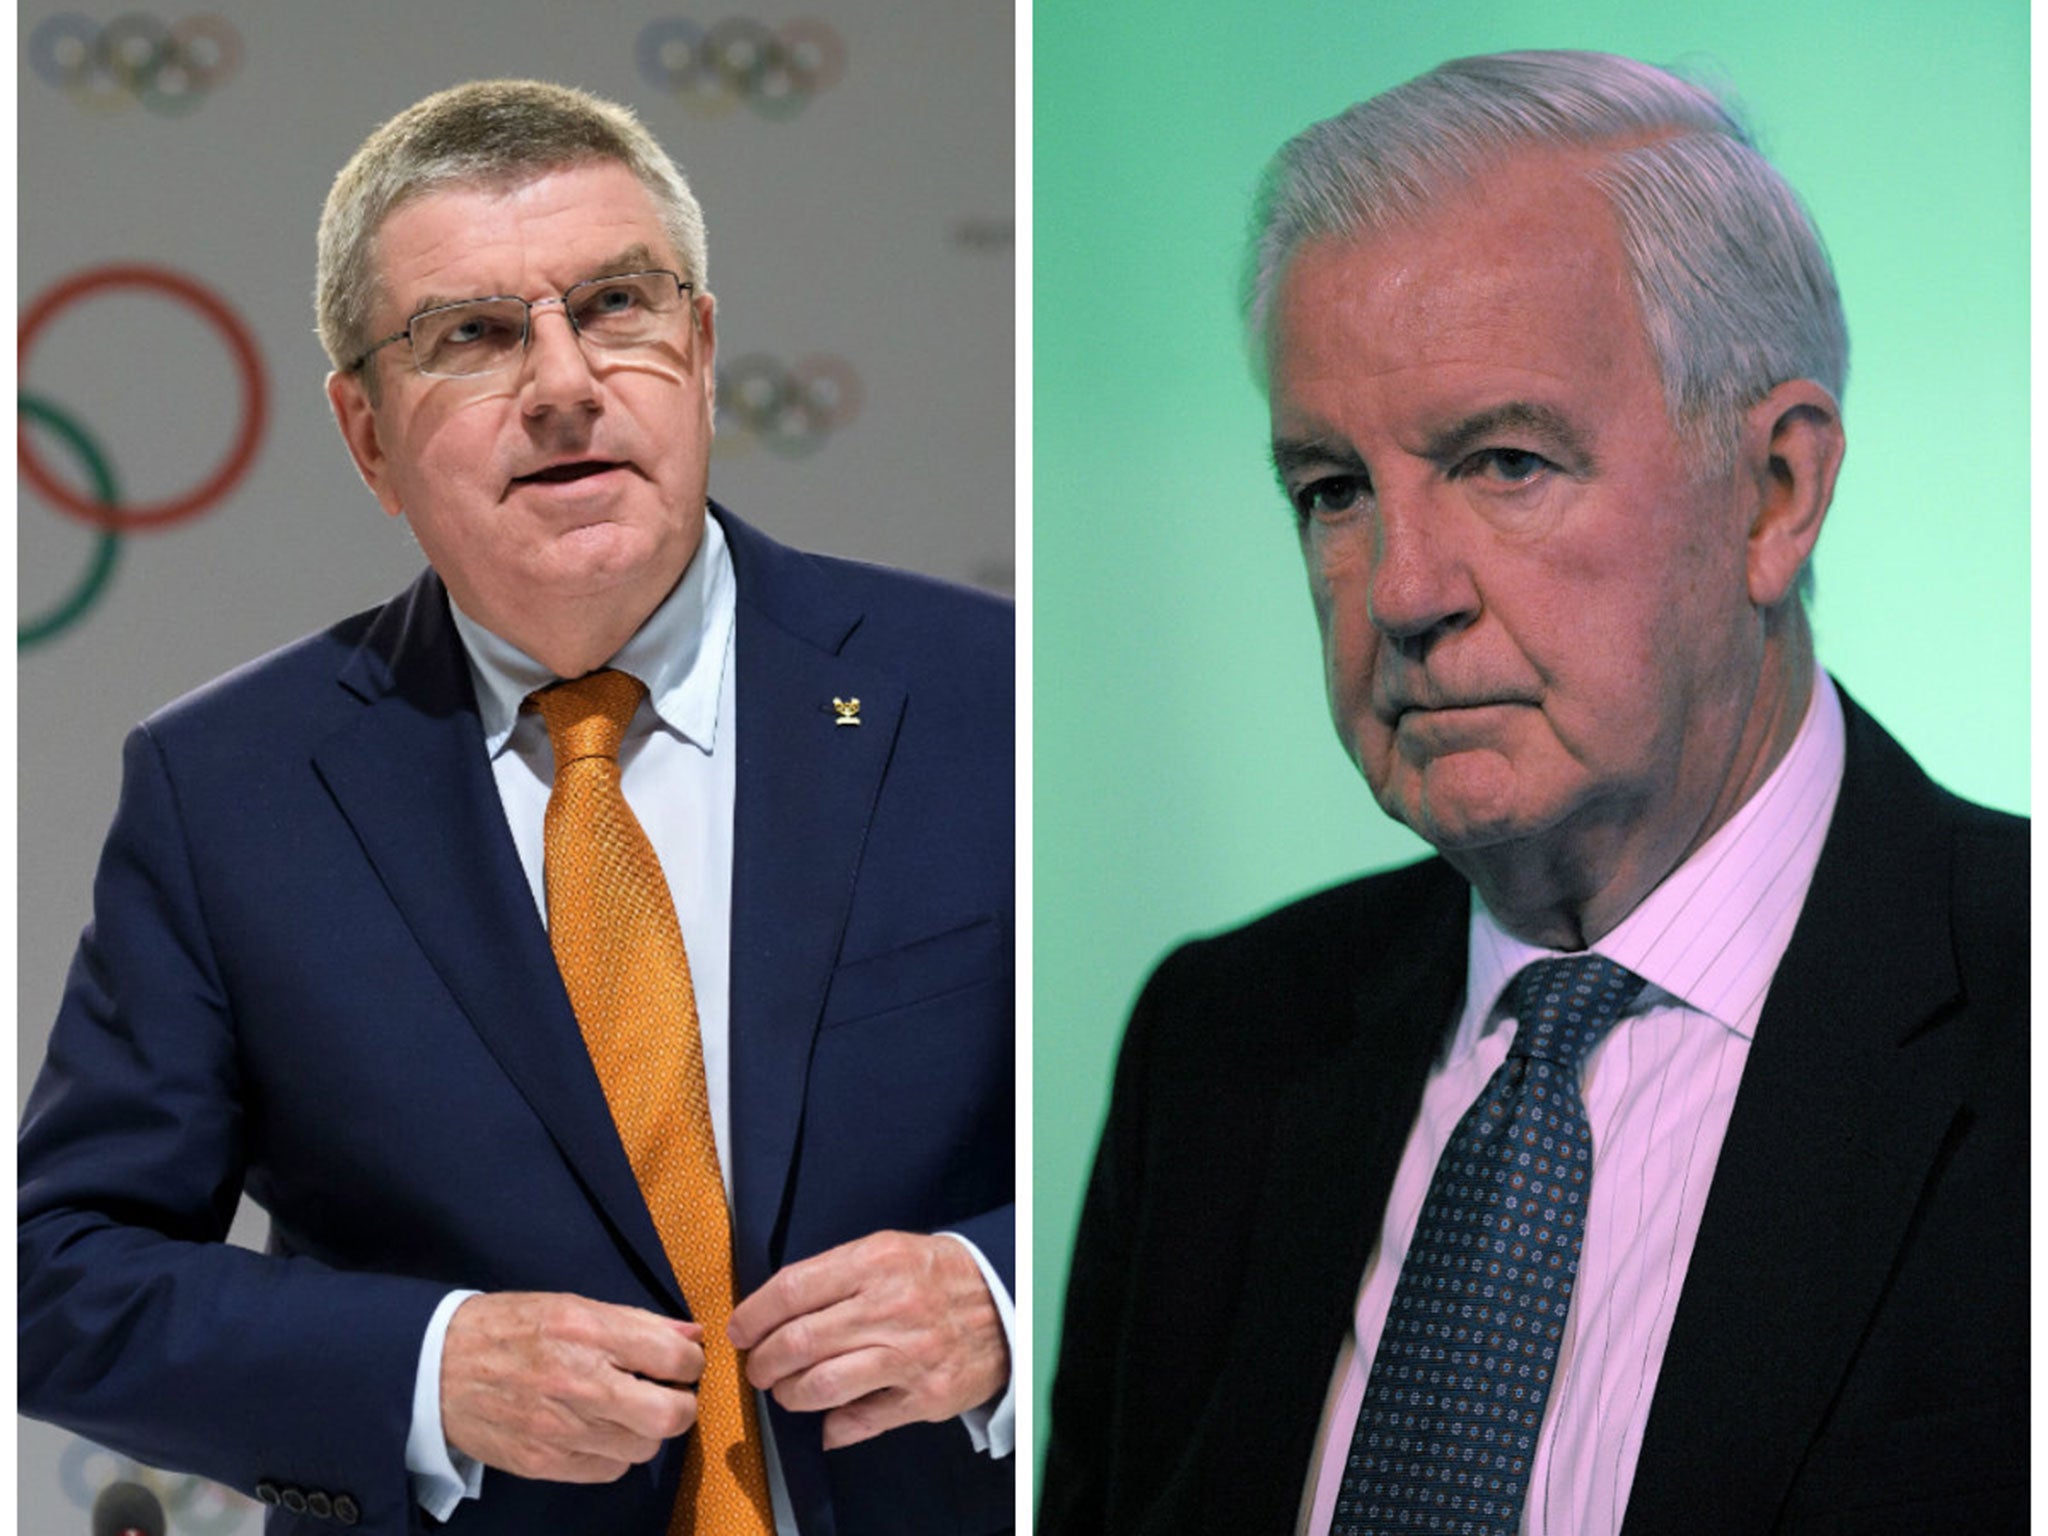 Thomas Bach, head of the IOC, and Craig Reedie, head of Wada